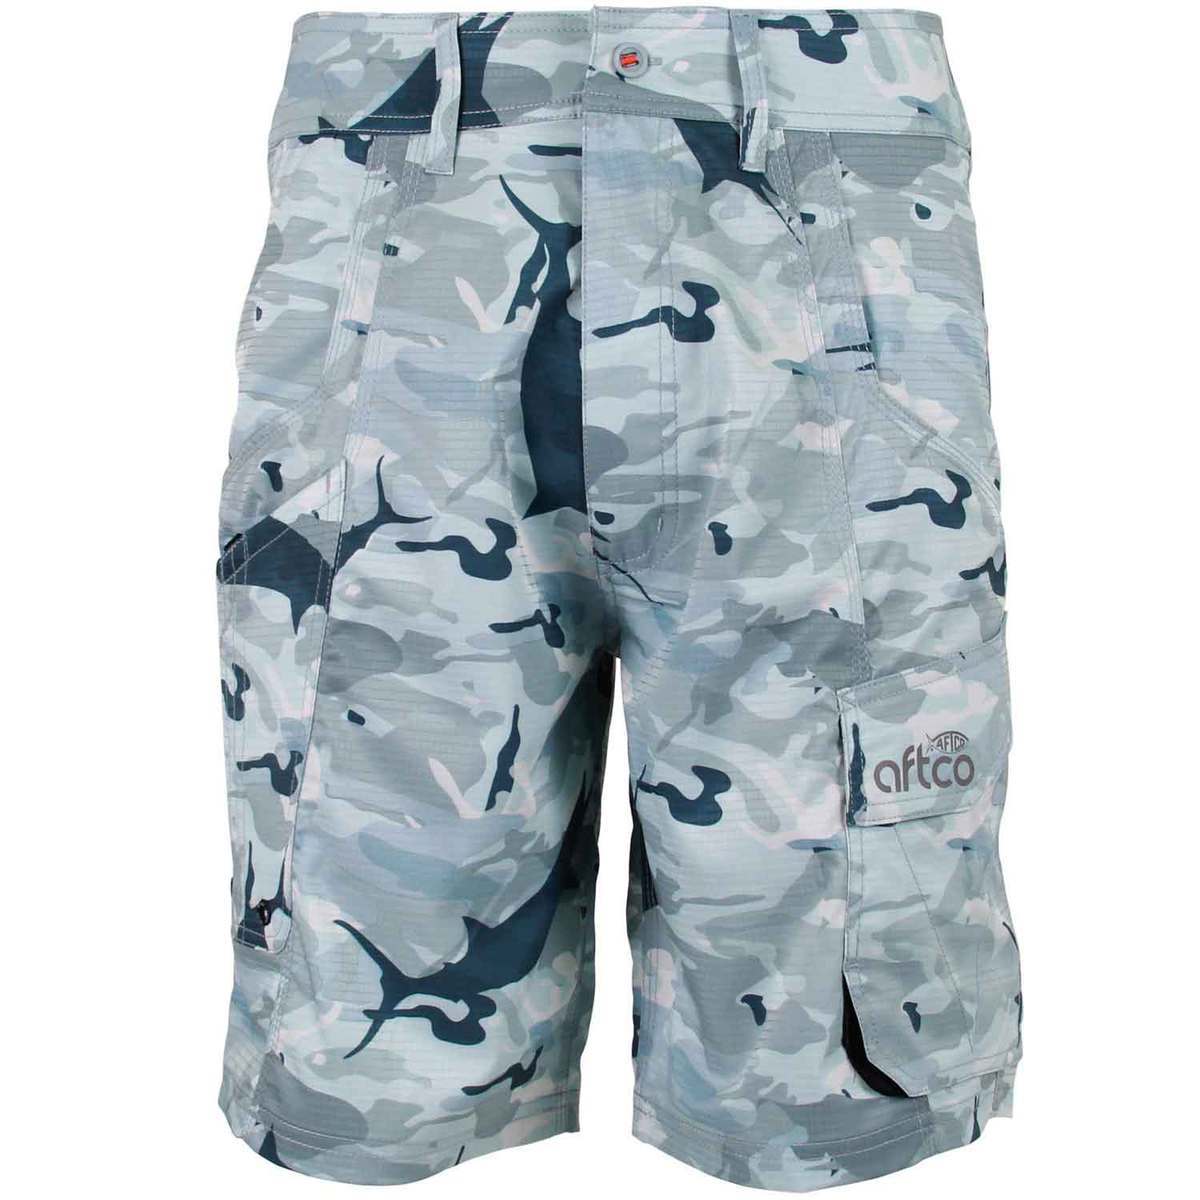 https://www.sportsmans.com/medias/aftco-mens-tactical-camo-active-fit-fishing-shorts-gray-camo-30-1635936-1.jpg?context=bWFzdGVyfGltYWdlc3w5OTE2MnxpbWFnZS9qcGVnfGFXMWhaMlZ6TDJneE5DOW9NMkl2T1RnMk1UQTBNemszT0RJM01DNXFjR2N8YTUxYTFjYjVkYmI4MDg1ZjdmZmE0NjA3YmVlYjIzMTRkNjRkMTMxY2NiNTRkZGRkOTE3NTFhYjZhOTg3NGY5Nw